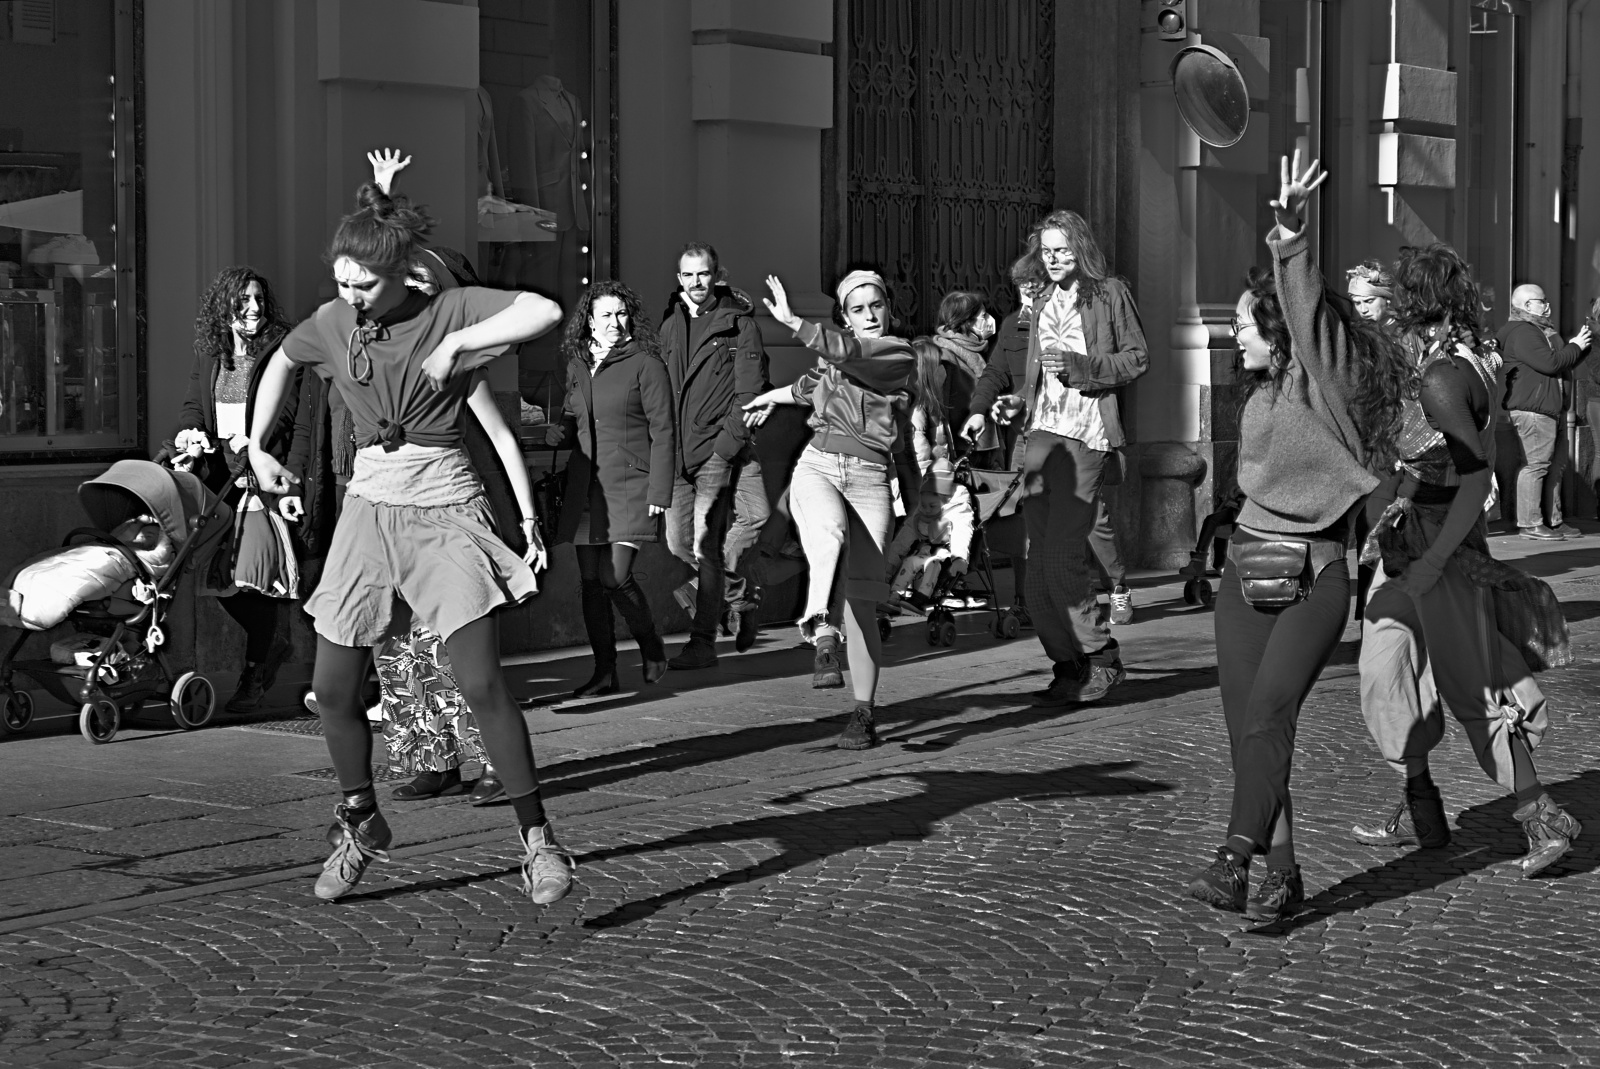 Dancing in the street...